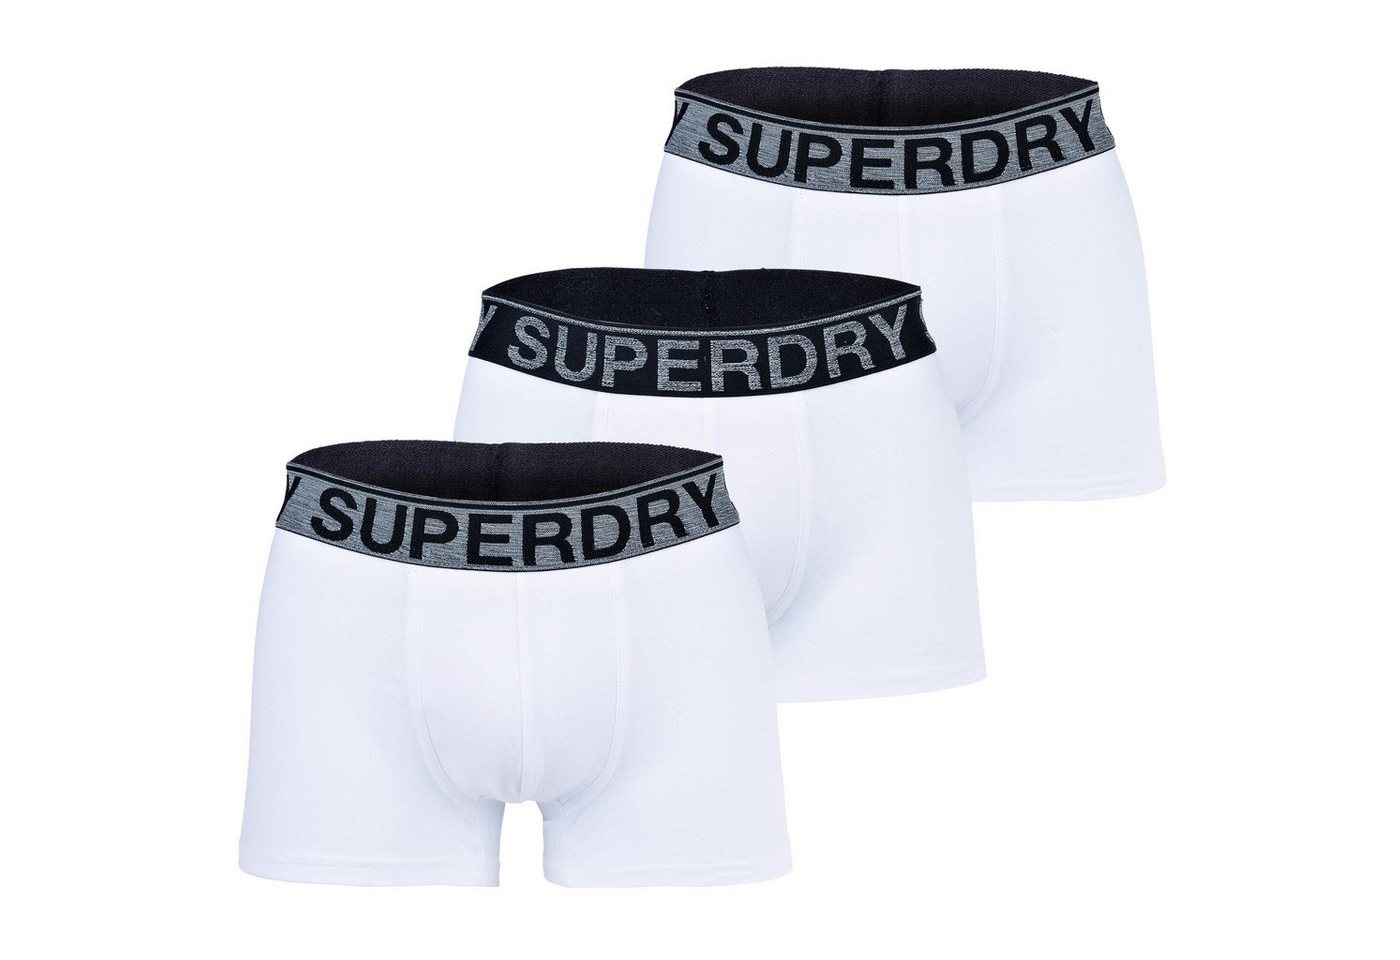 Superdry Boxer Herren Boxershorts, 3er Pack - TRUNK TRIPLE PACK von Superdry